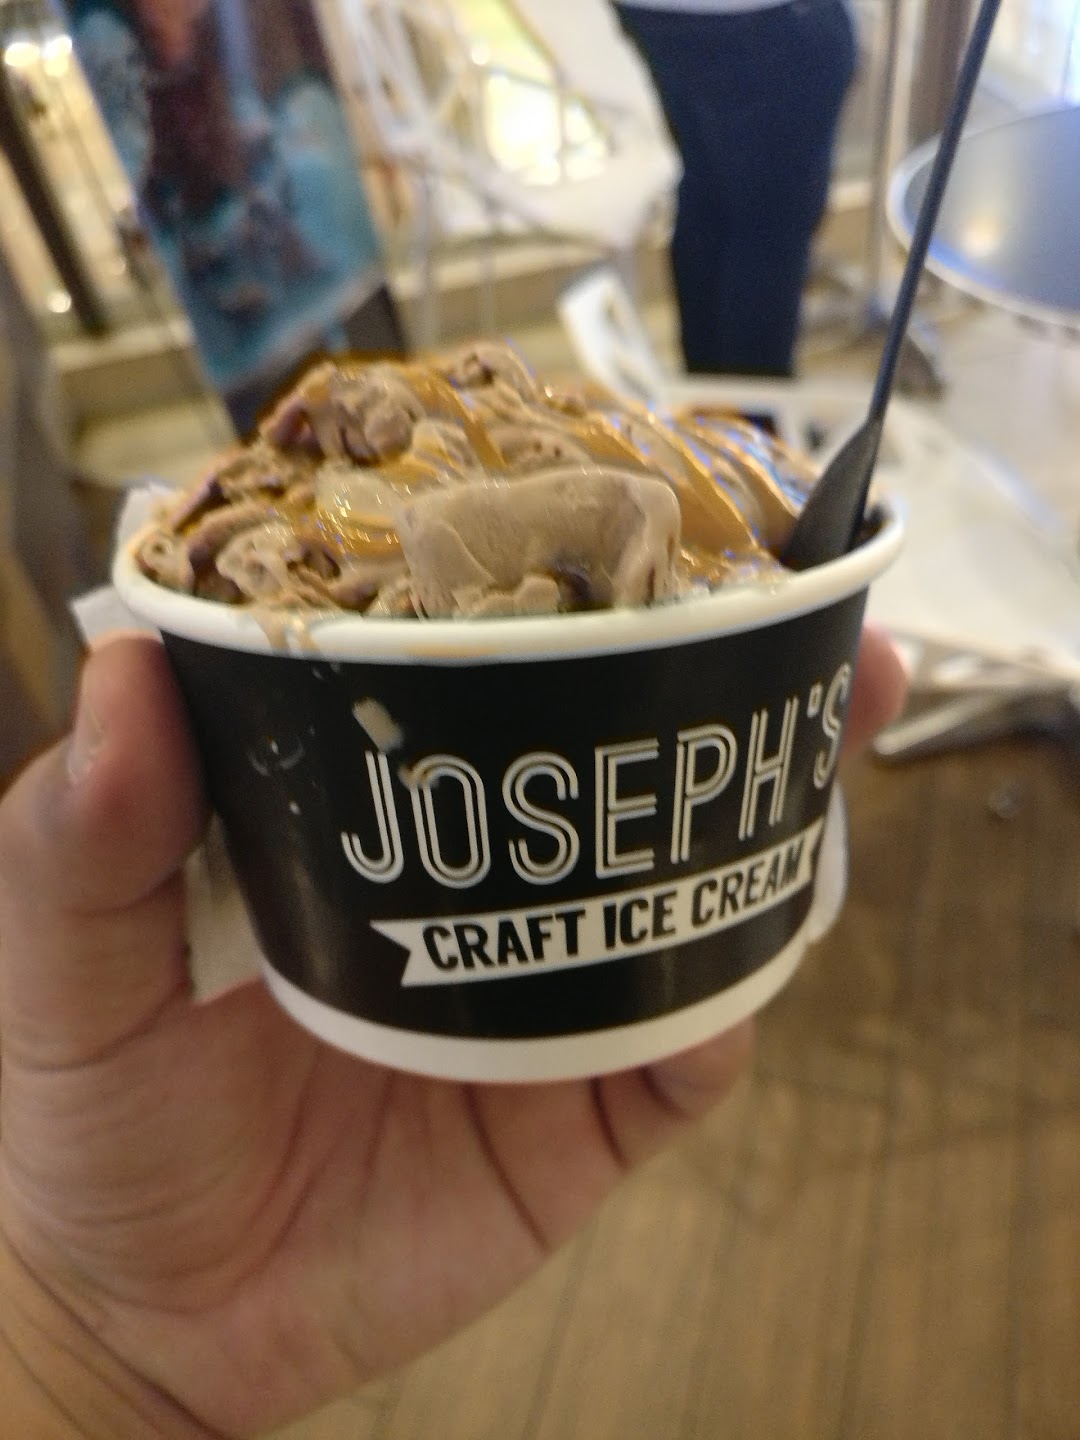 Josephs Craft Ice Cream